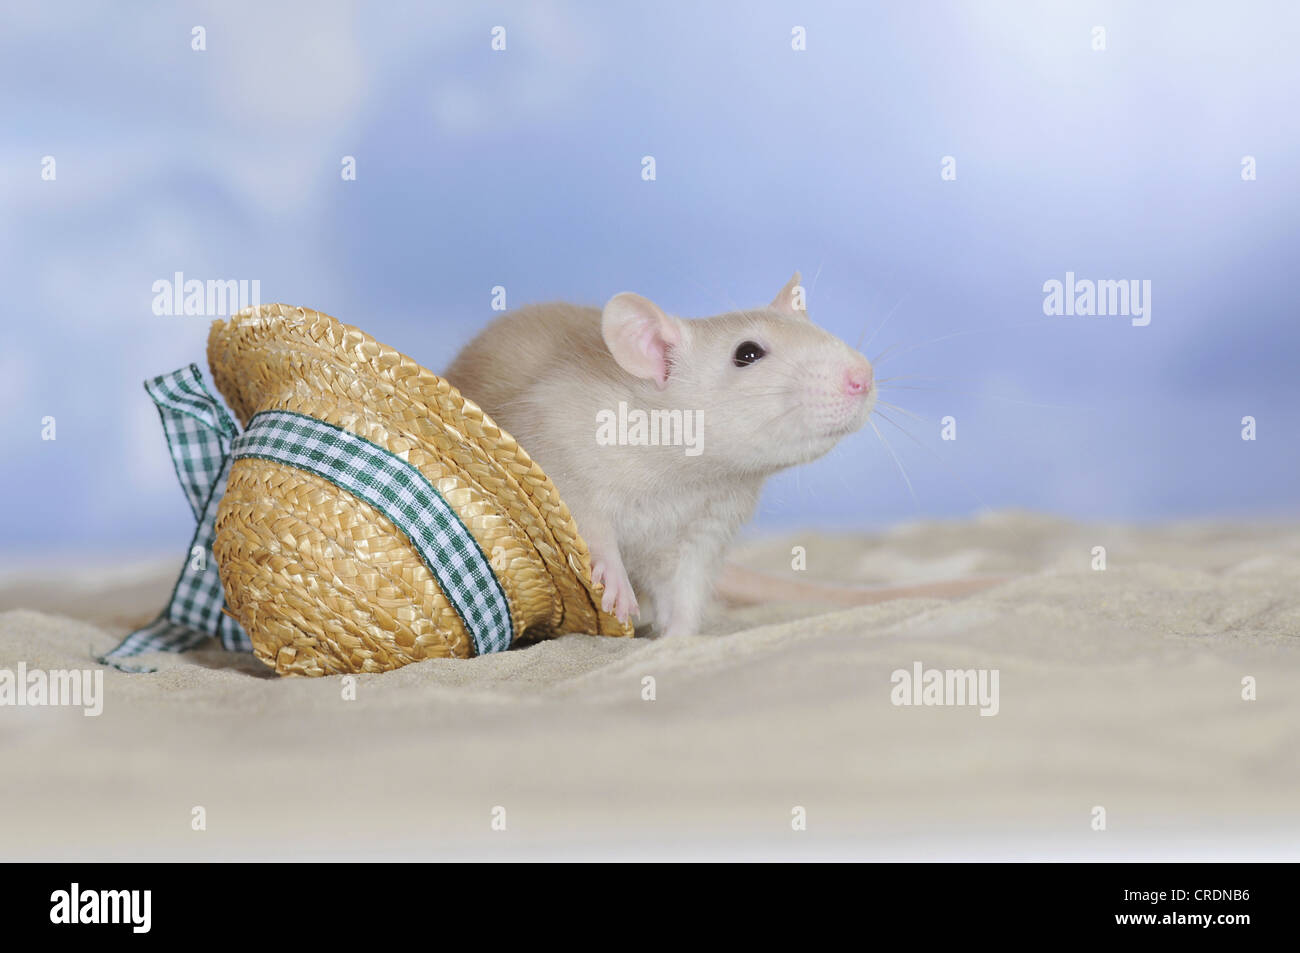 Fancy Rat, cream coloured, sitting on sand beside a mini straw hat Stock Photo